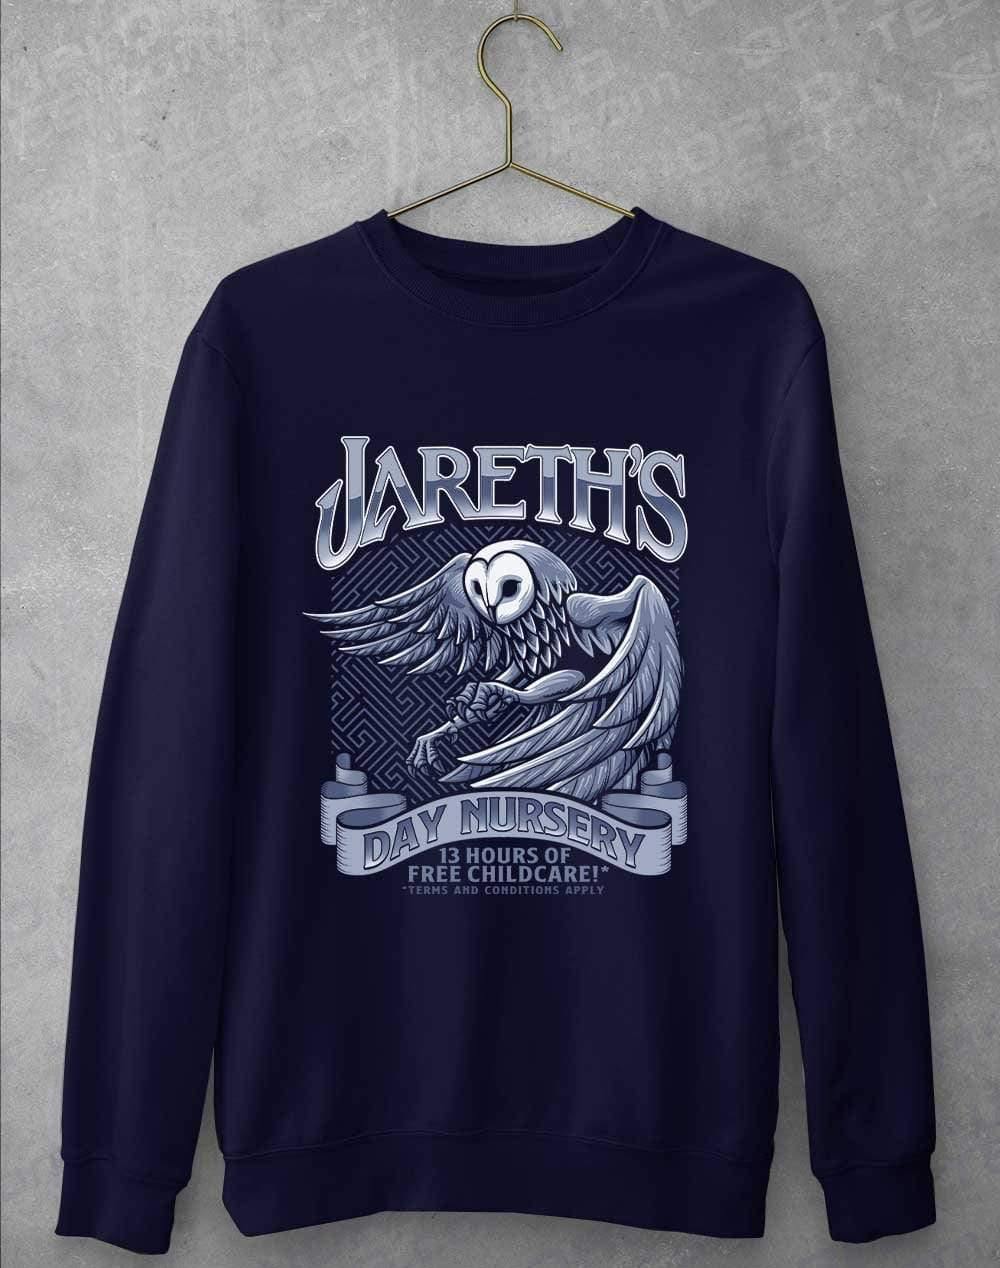 Jareth's Day Nursery Sweatshirt S / Oxford Navy  - Off World Tees